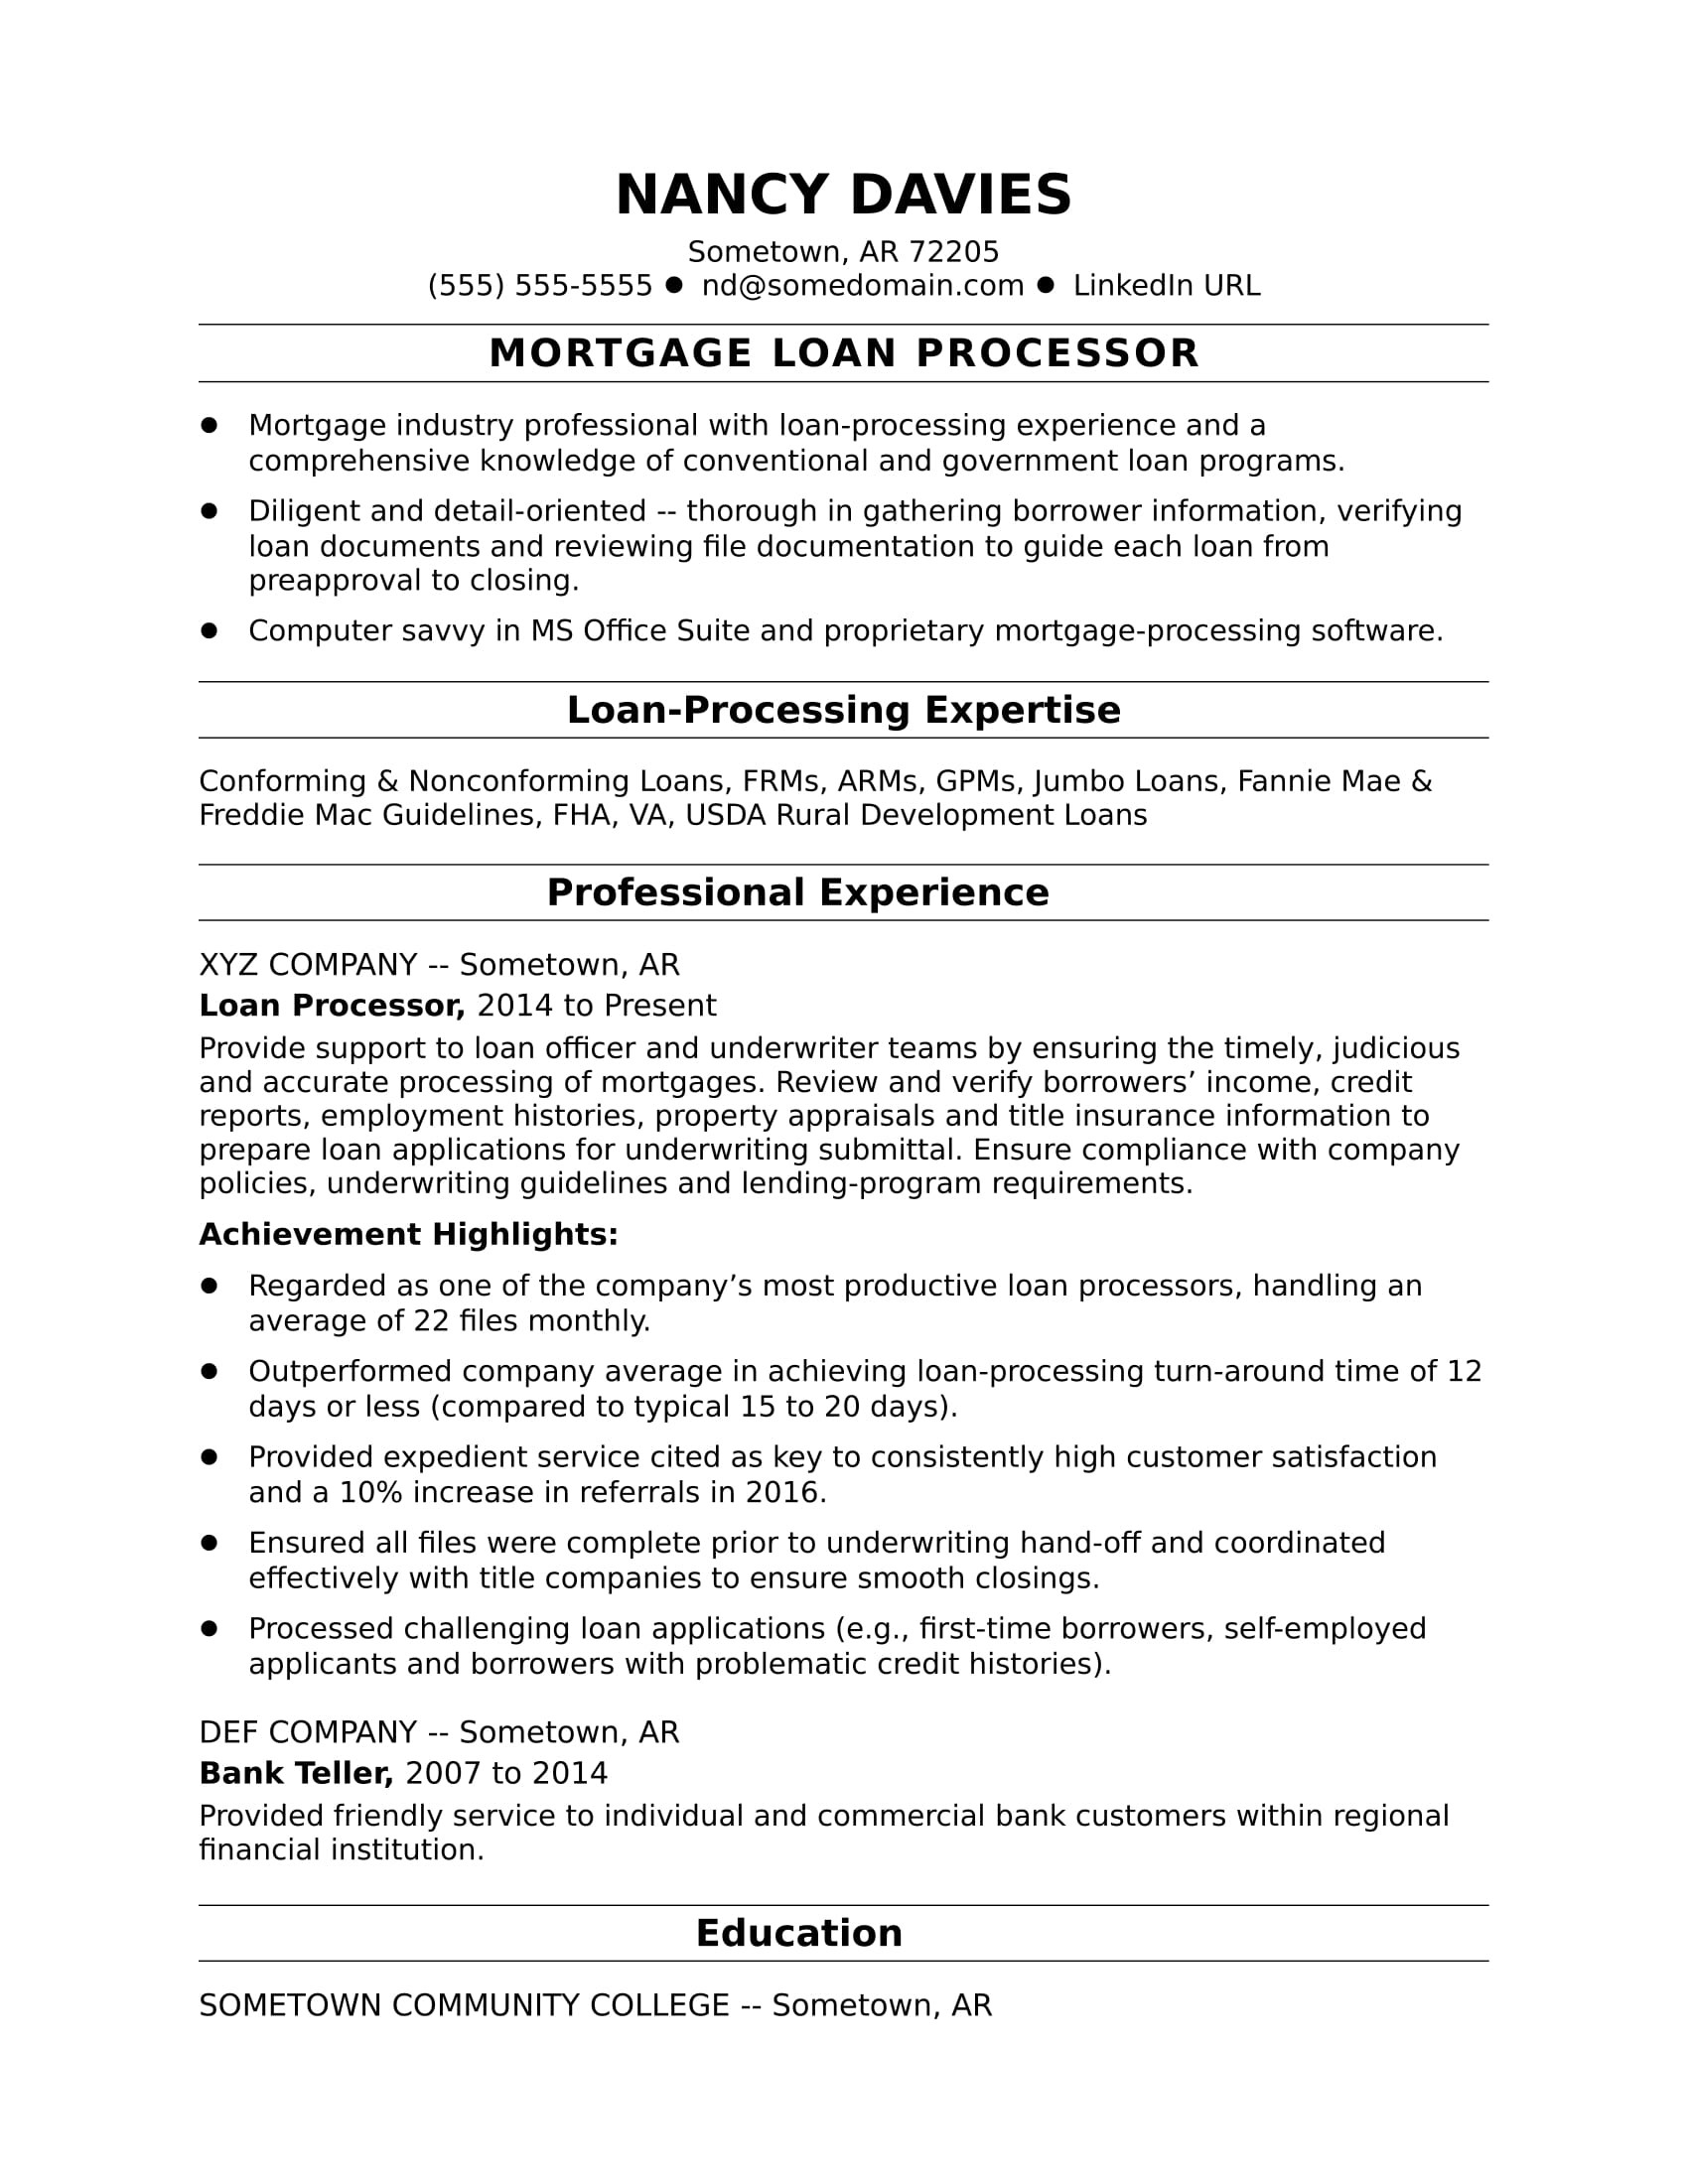 Sample Resume for Us Mortgage Underwriter Mortgage Loan Processor Resume Sample Monster.com